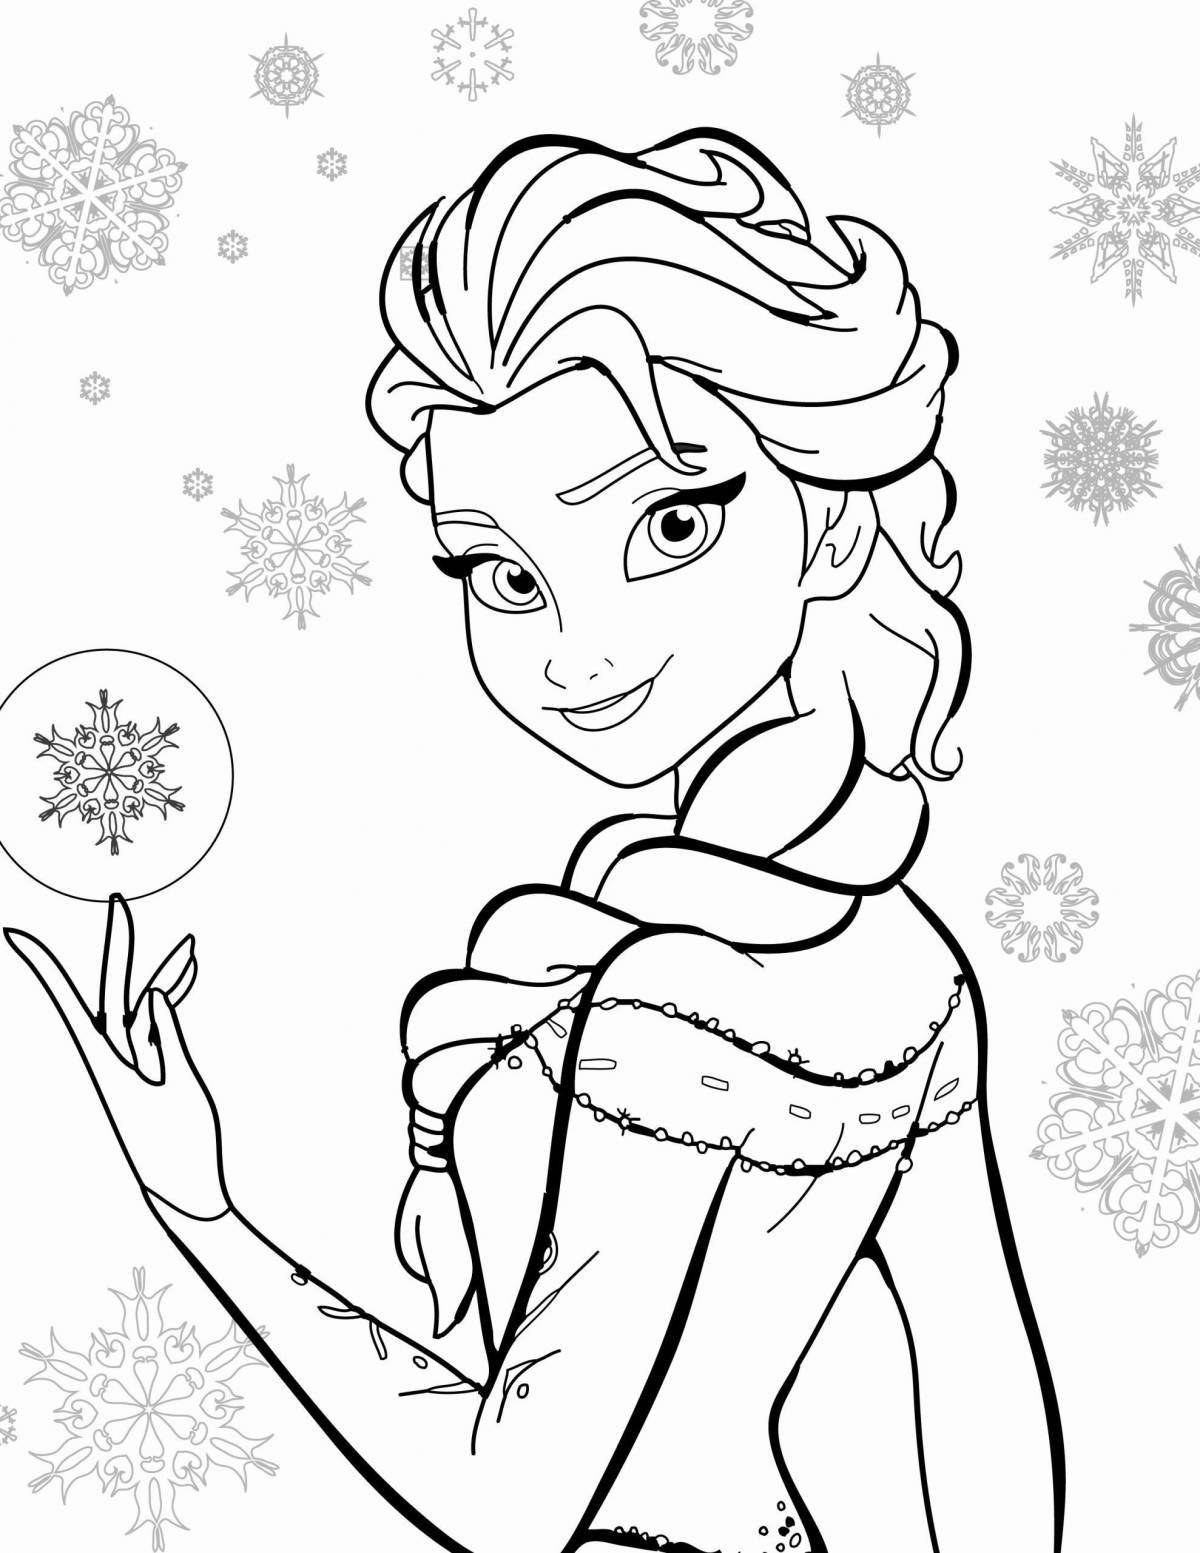 Elsa with clothes #1